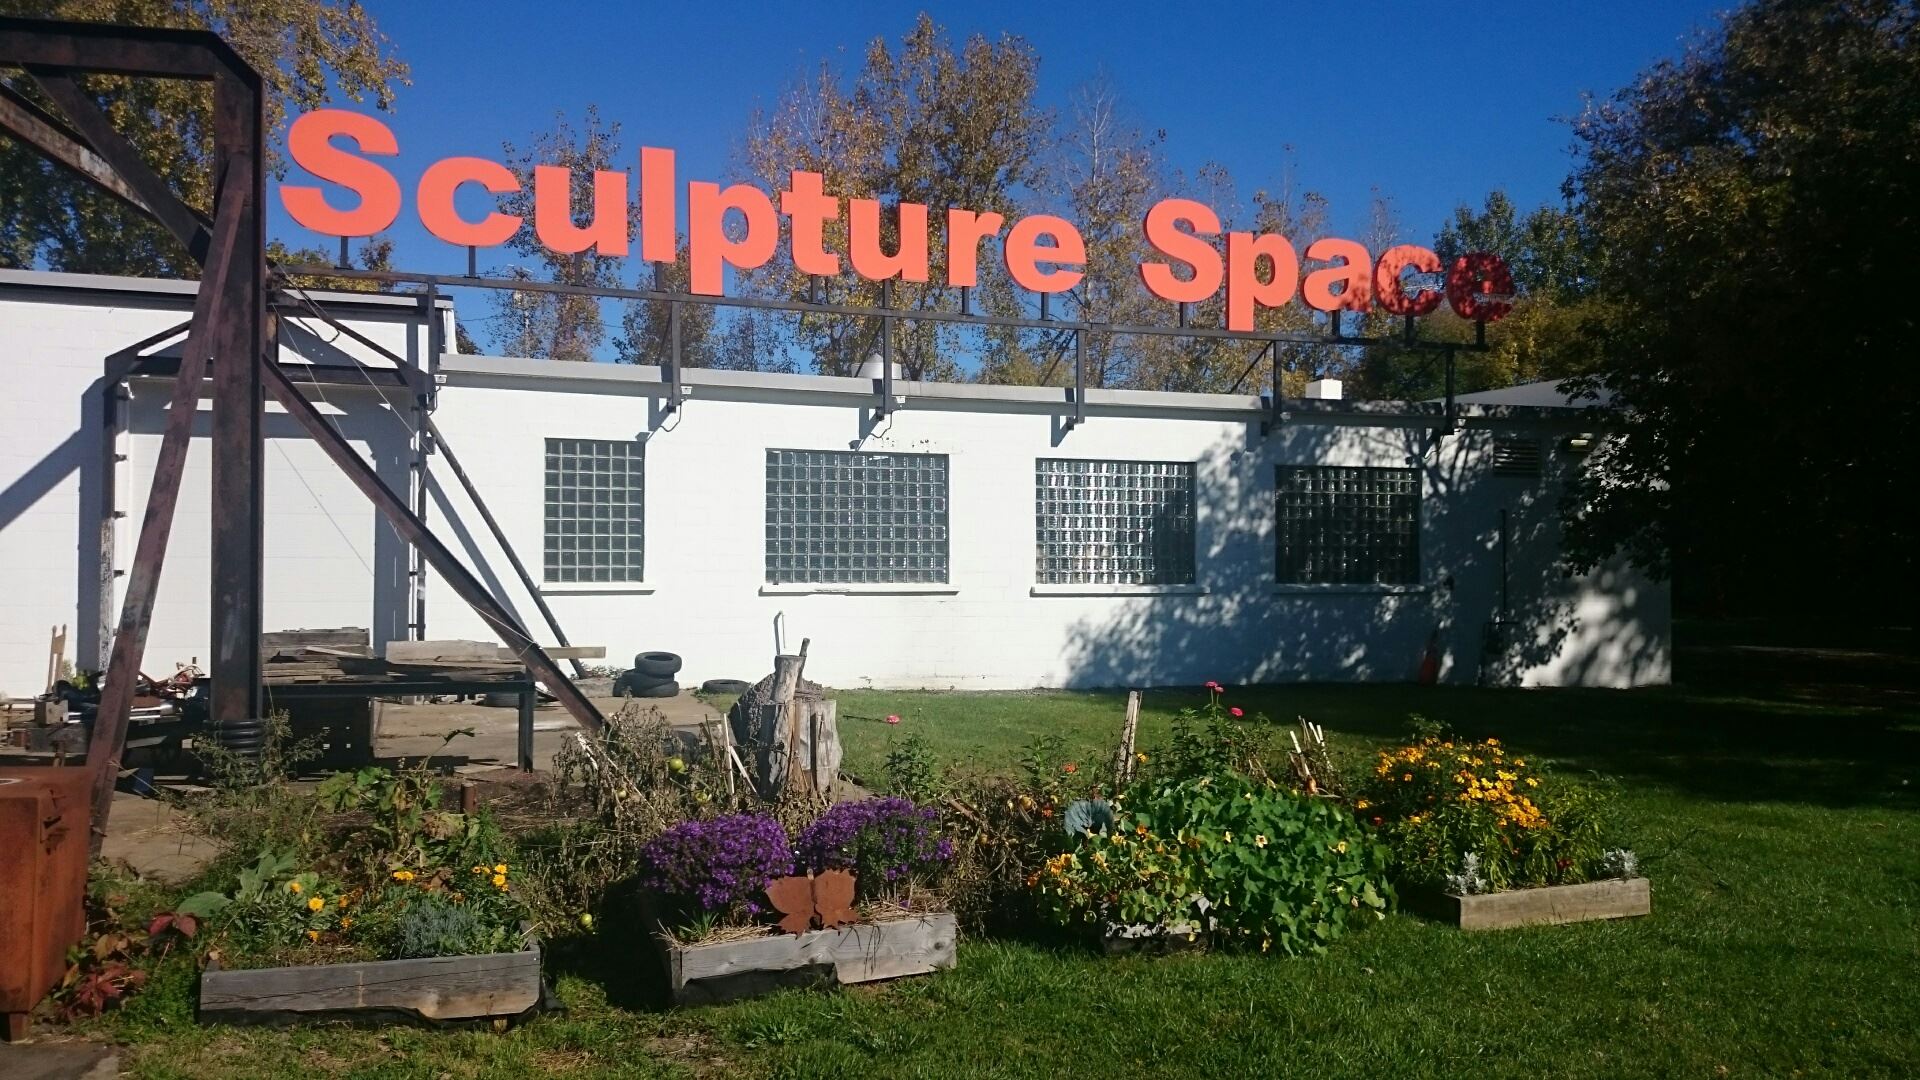 Sculpture Space Inc